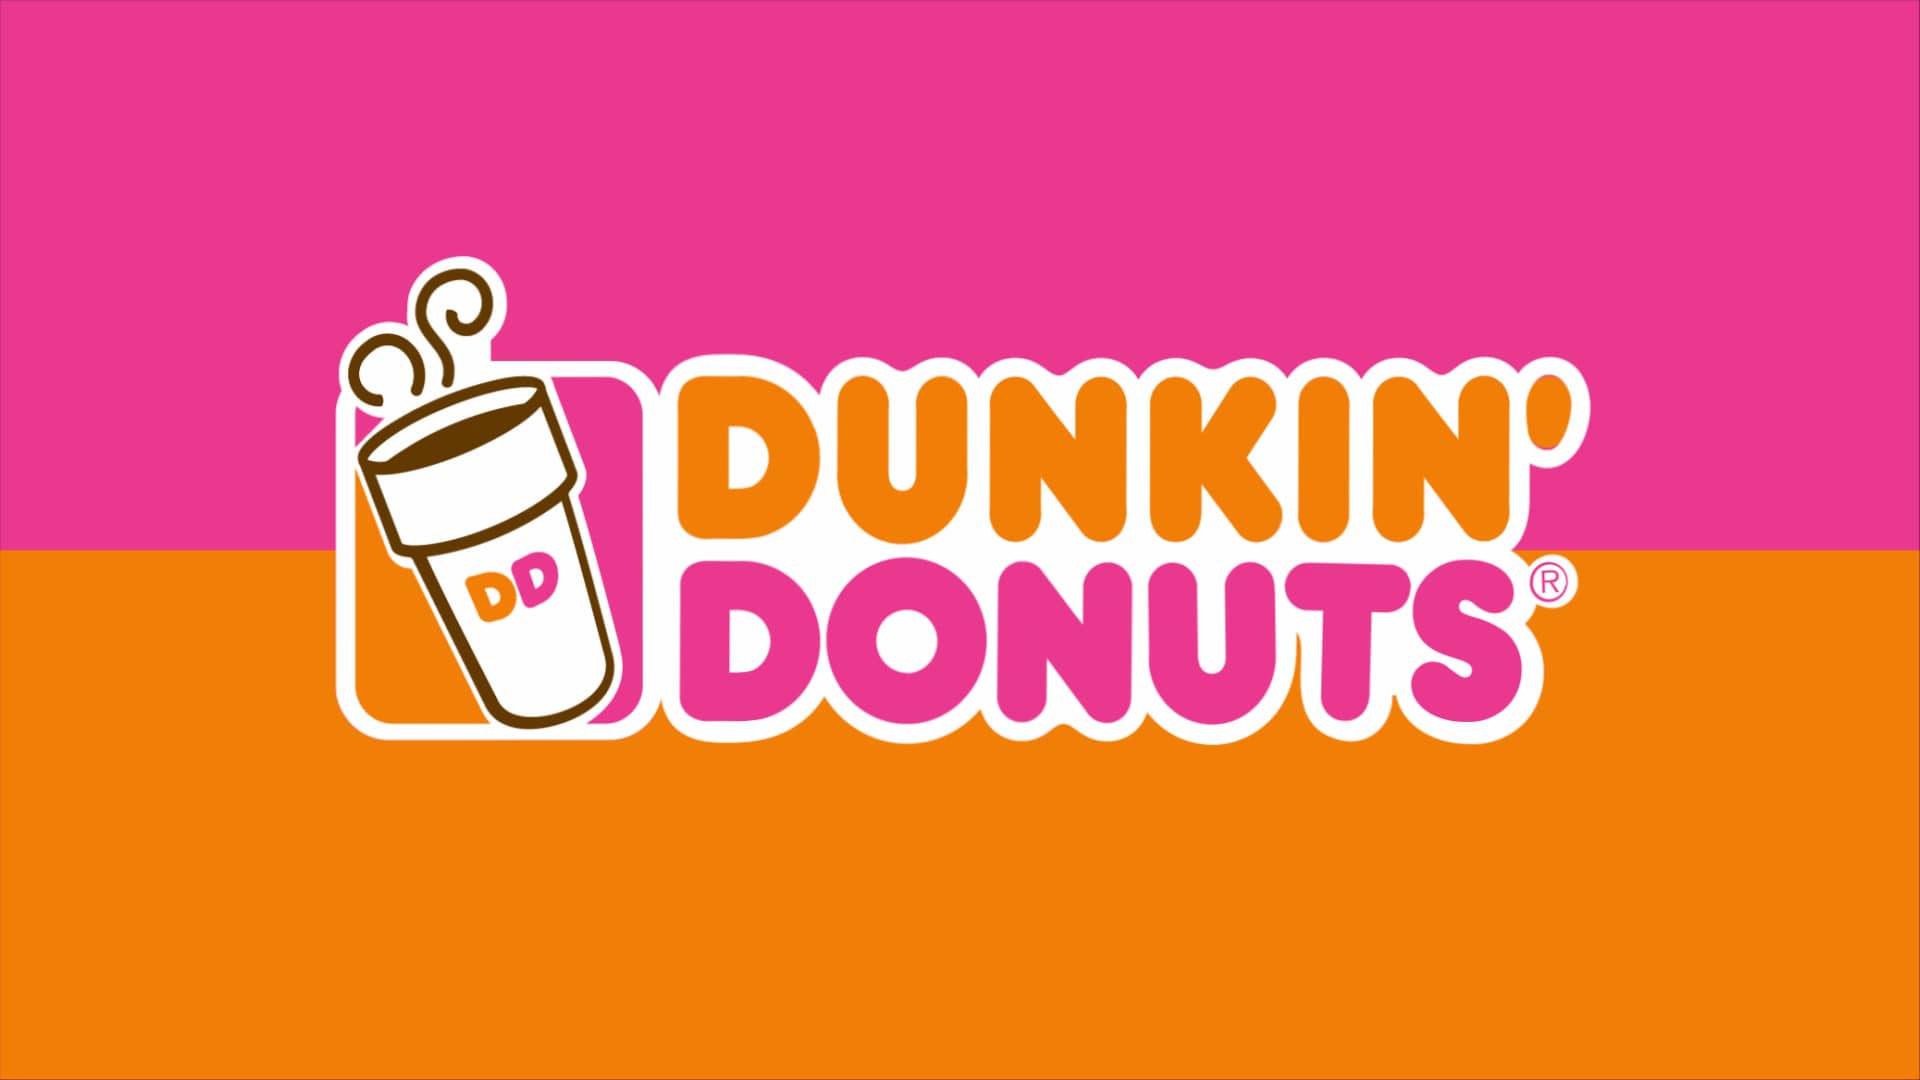 Dunkin' Donuts Animated Logo on Vimeo.